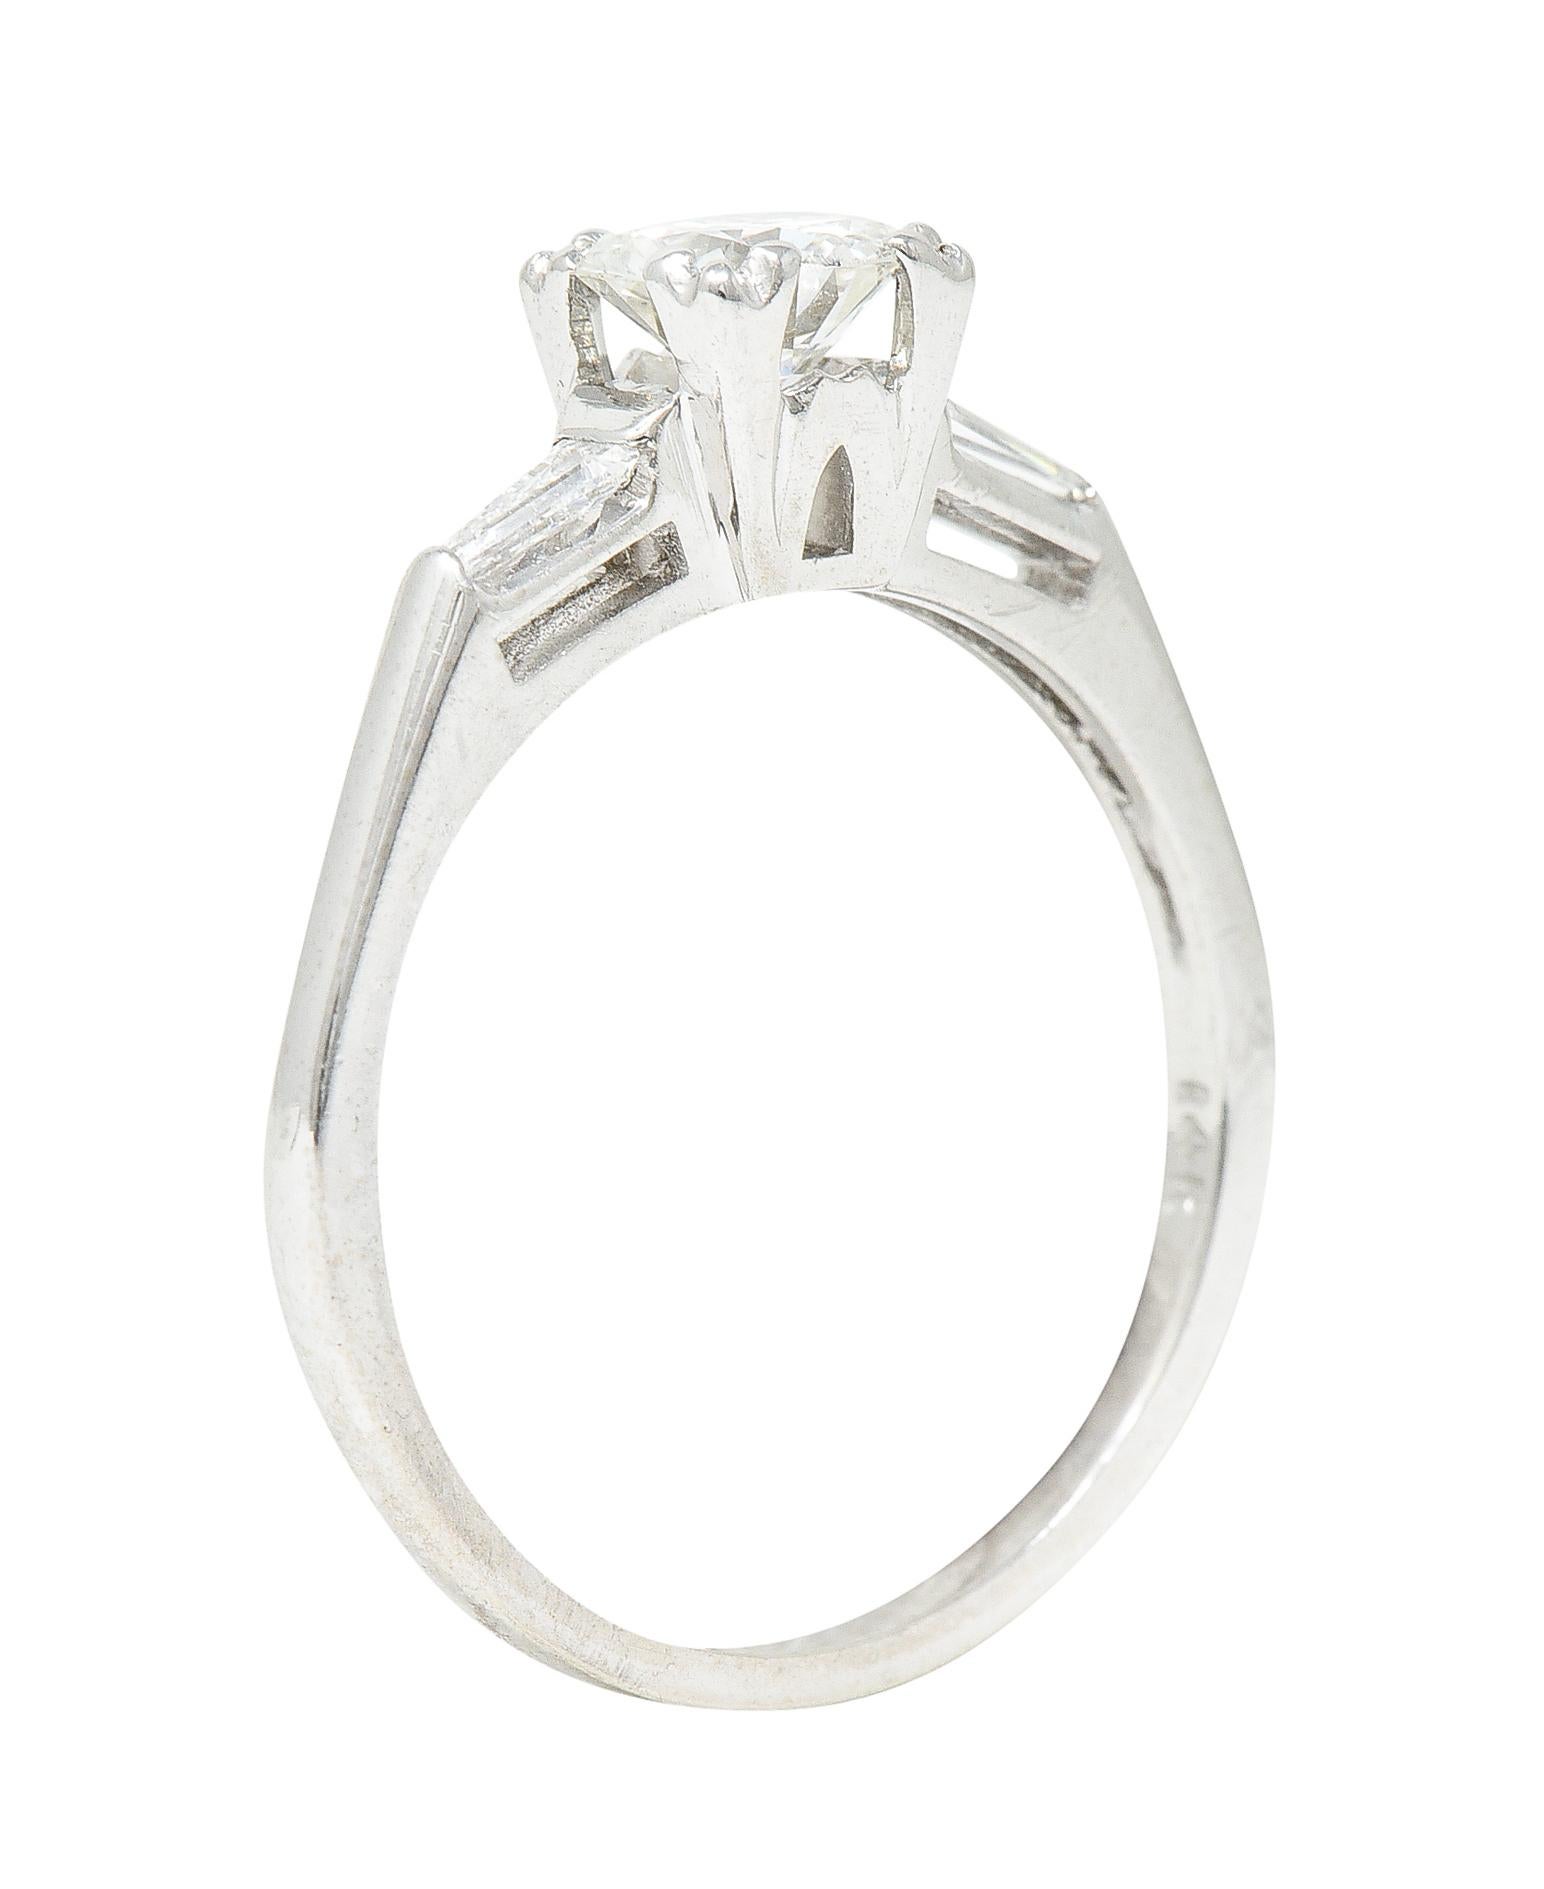 1950's Mid-Century 0.76 Carat Transitional Cut Diamond 14 Karat Engagement Ring For Sale 2